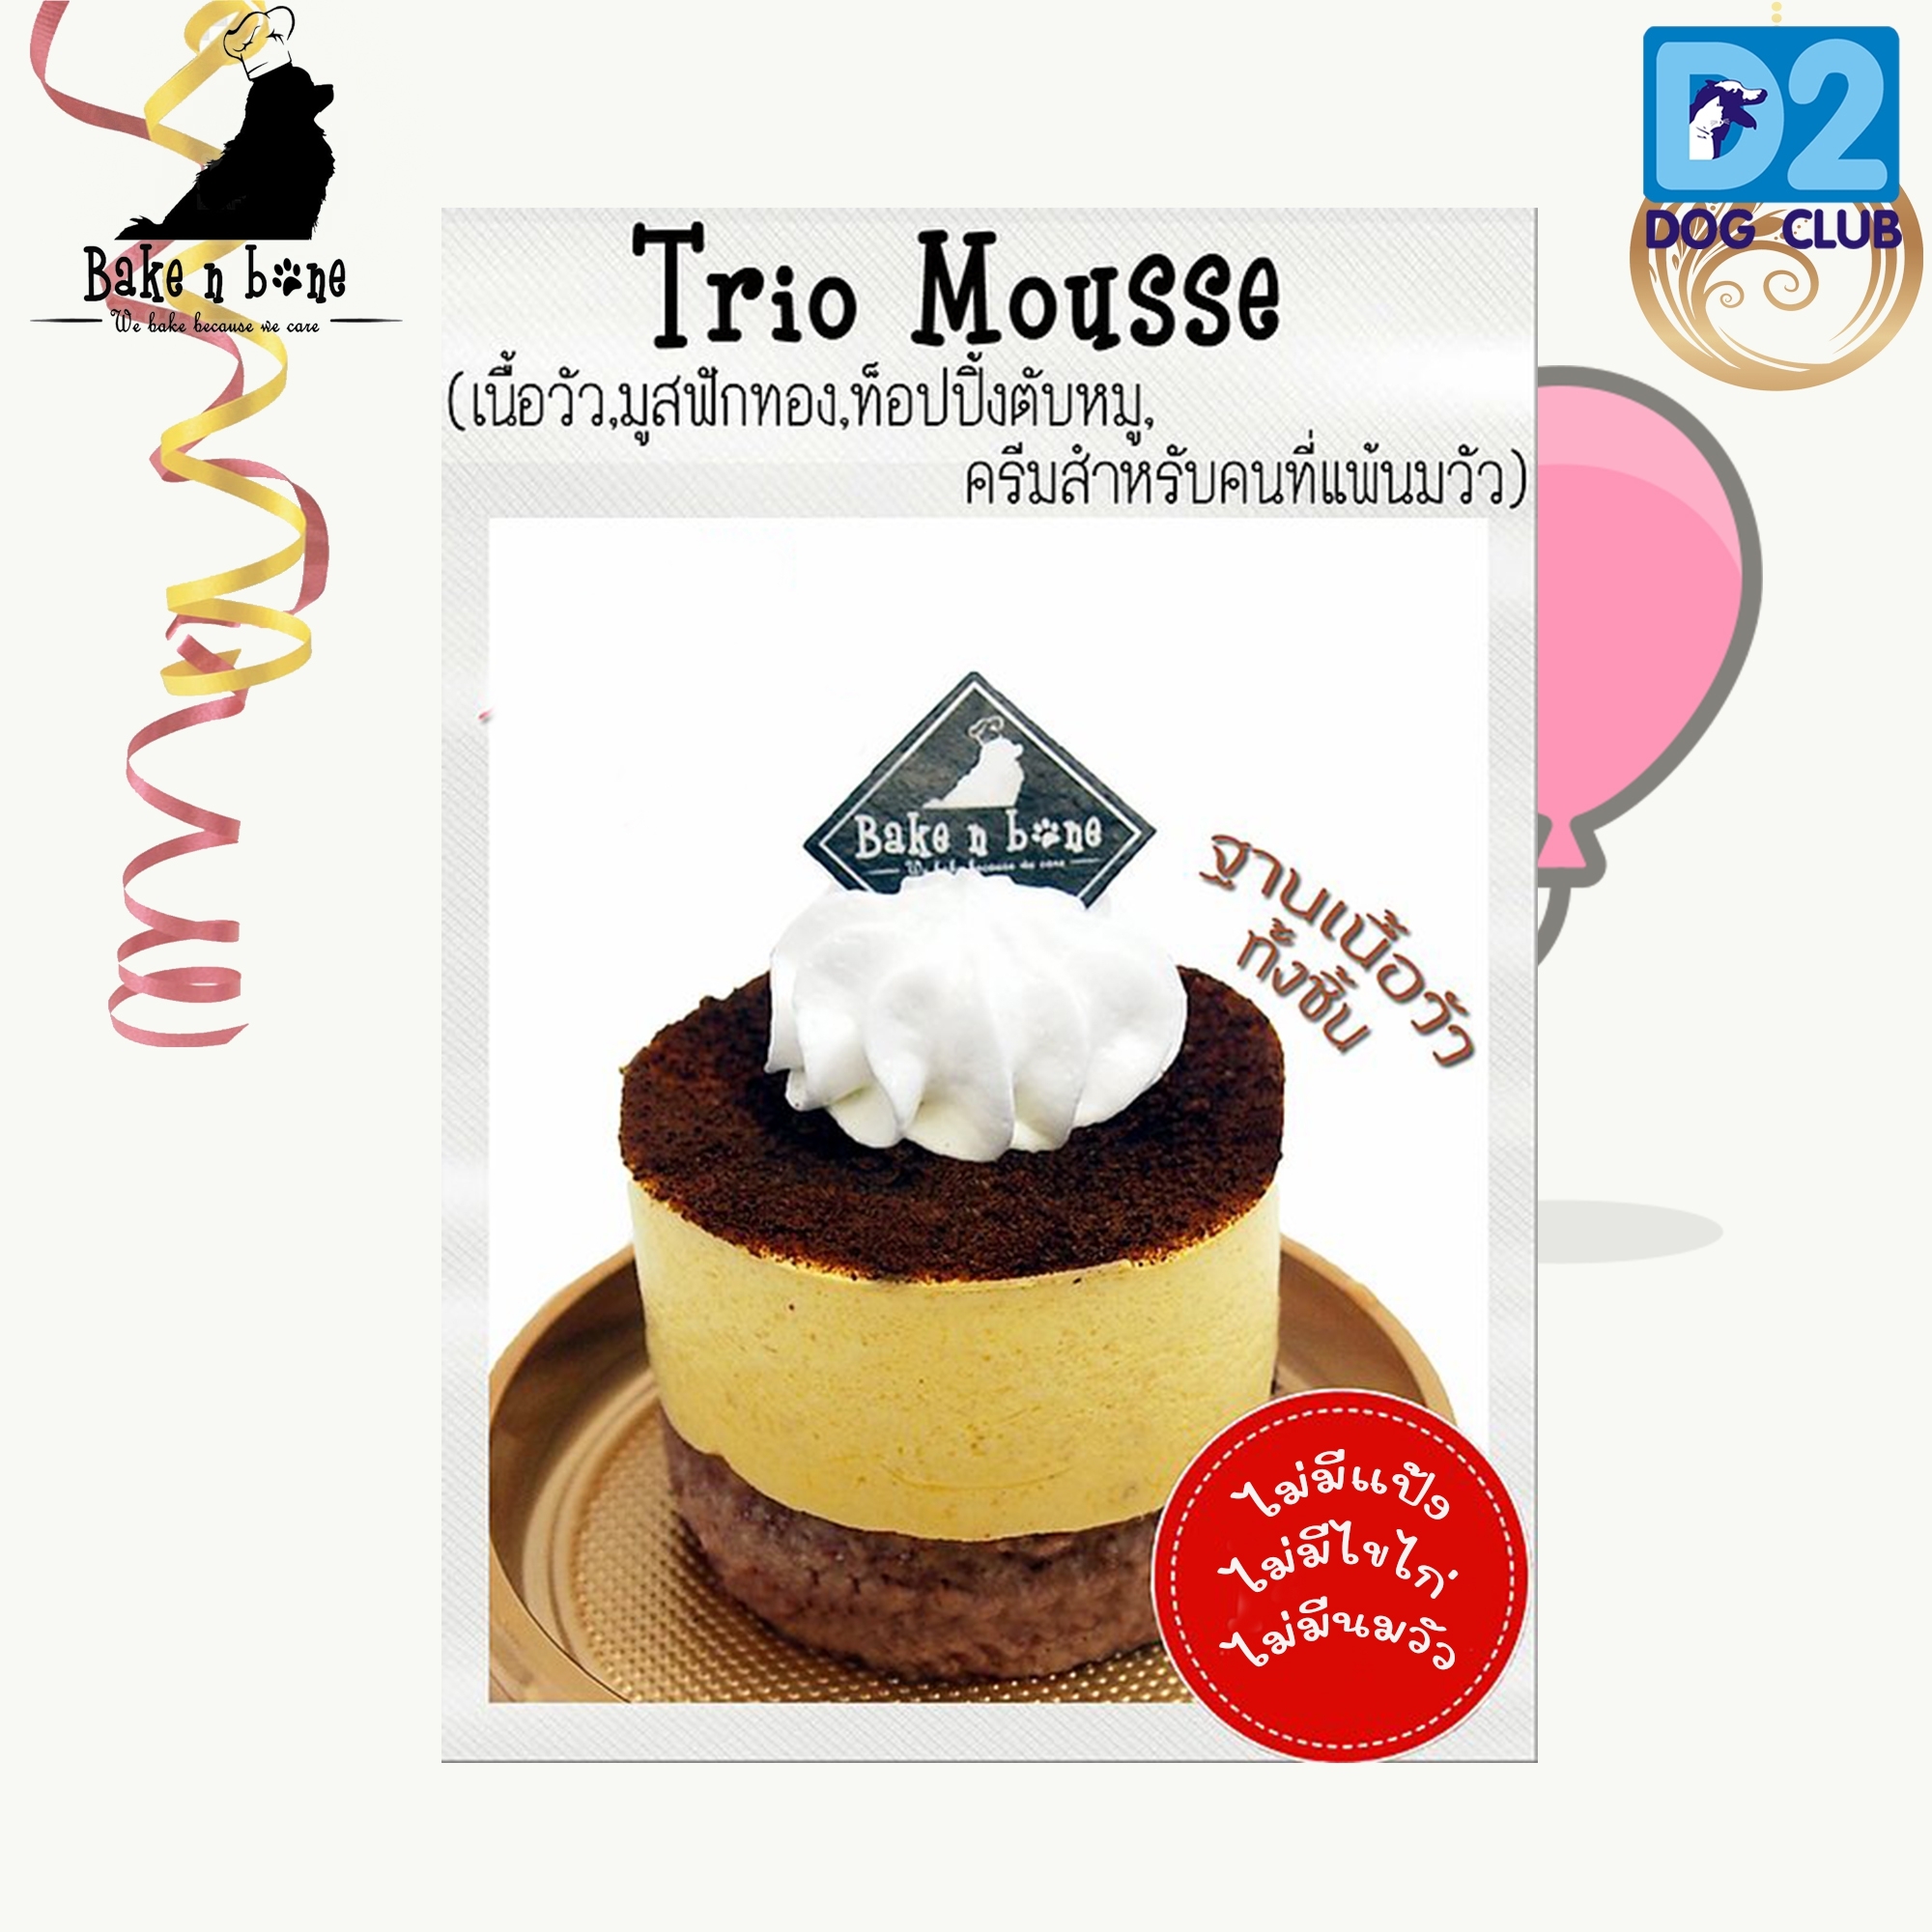 Bake n Bone Trio Mousse เค้กทริโอฟักทอง สำหรับสุนัข แมว 1 ก้อน